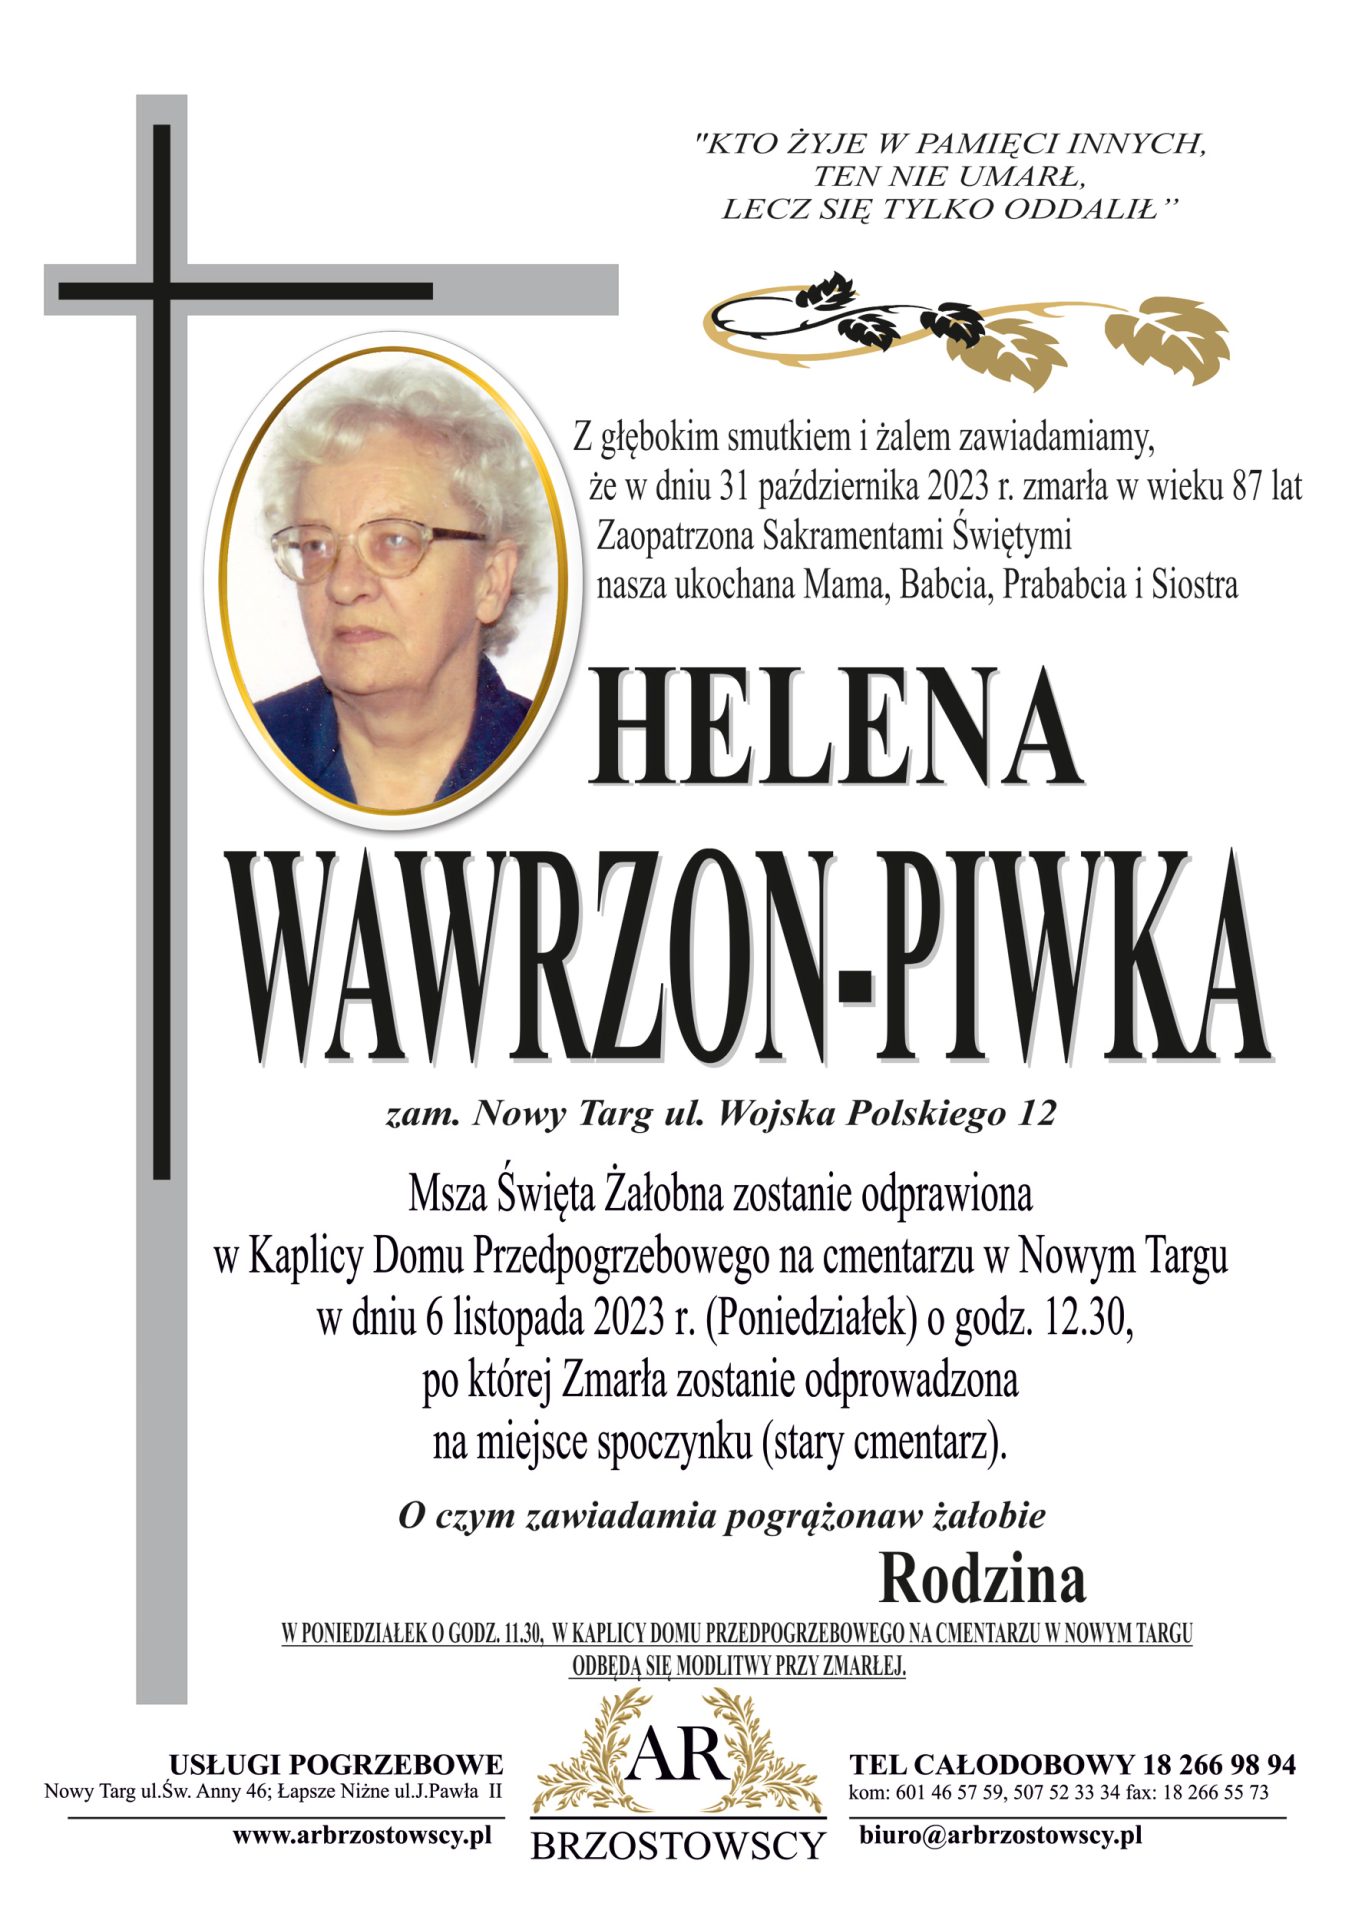 Helena Warzon-Piwka